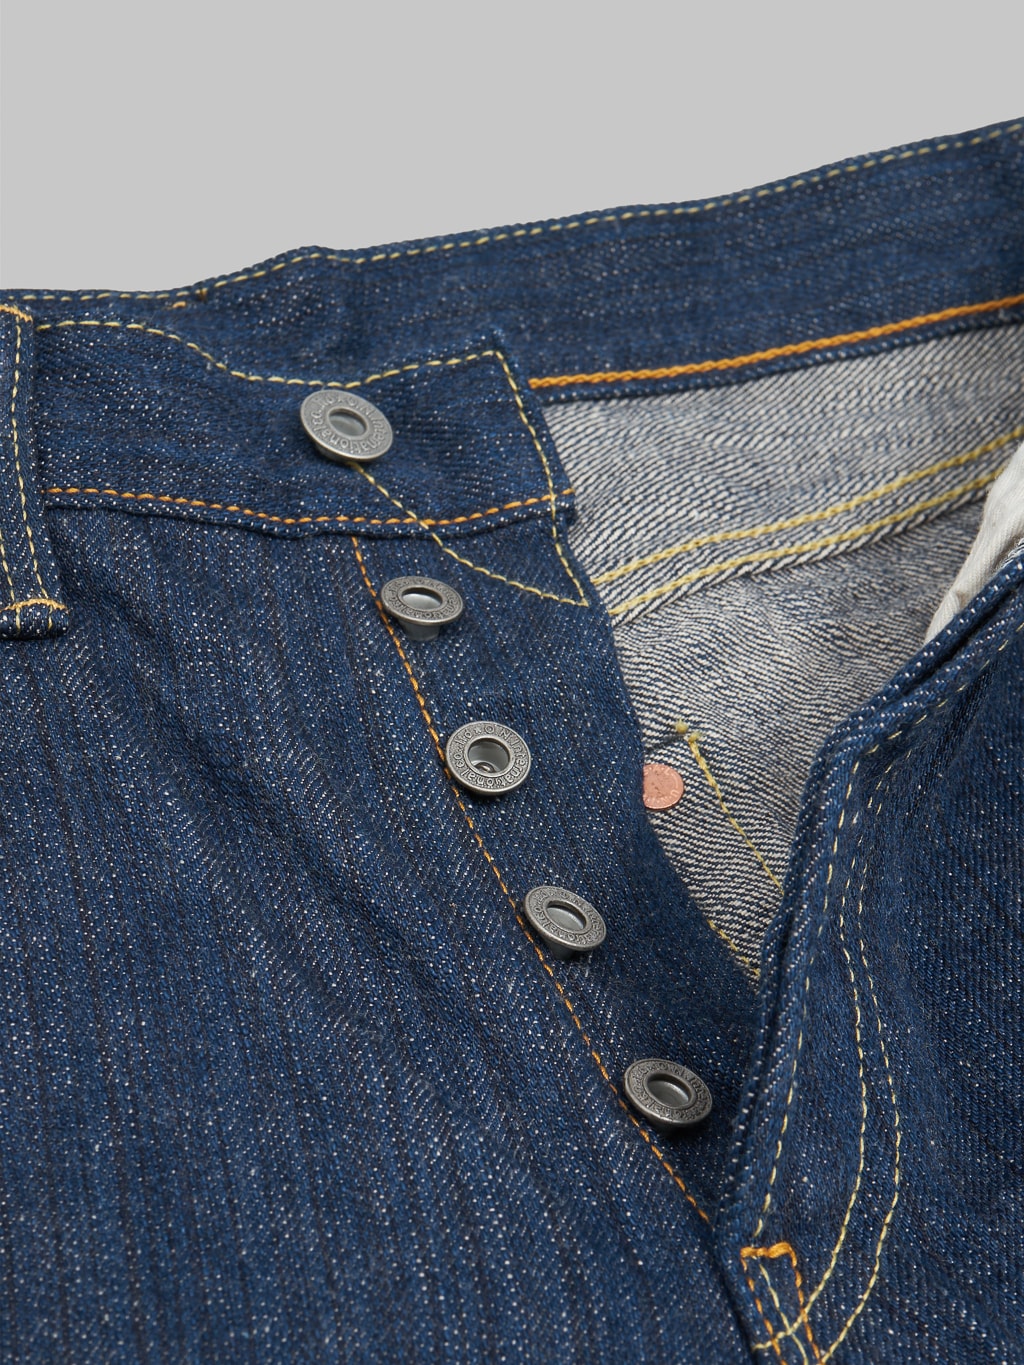 Oni denim kiwami indigo regular selvedge jeans custom copper buttons